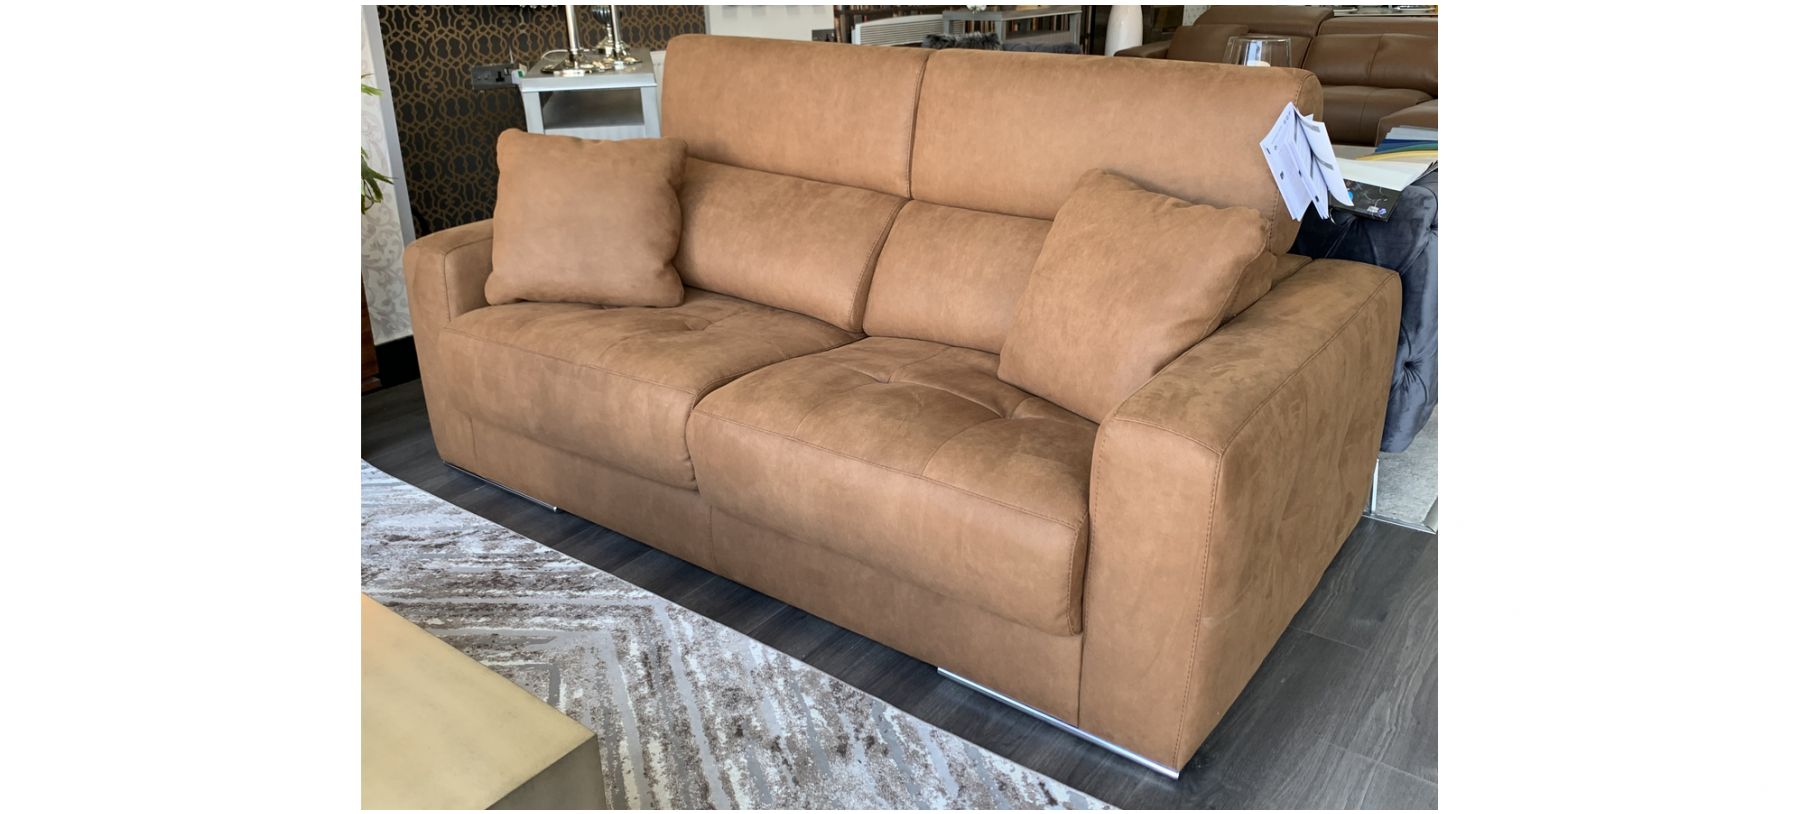 Ainhoa Saddle Brown Large Fabric Sofa Sofa Bed With Chrome Legs - Available  In A Range Of Aquaclean Fabrics And Leathers(Mattress Size 185cm 140cm) |  Leather Sofa World